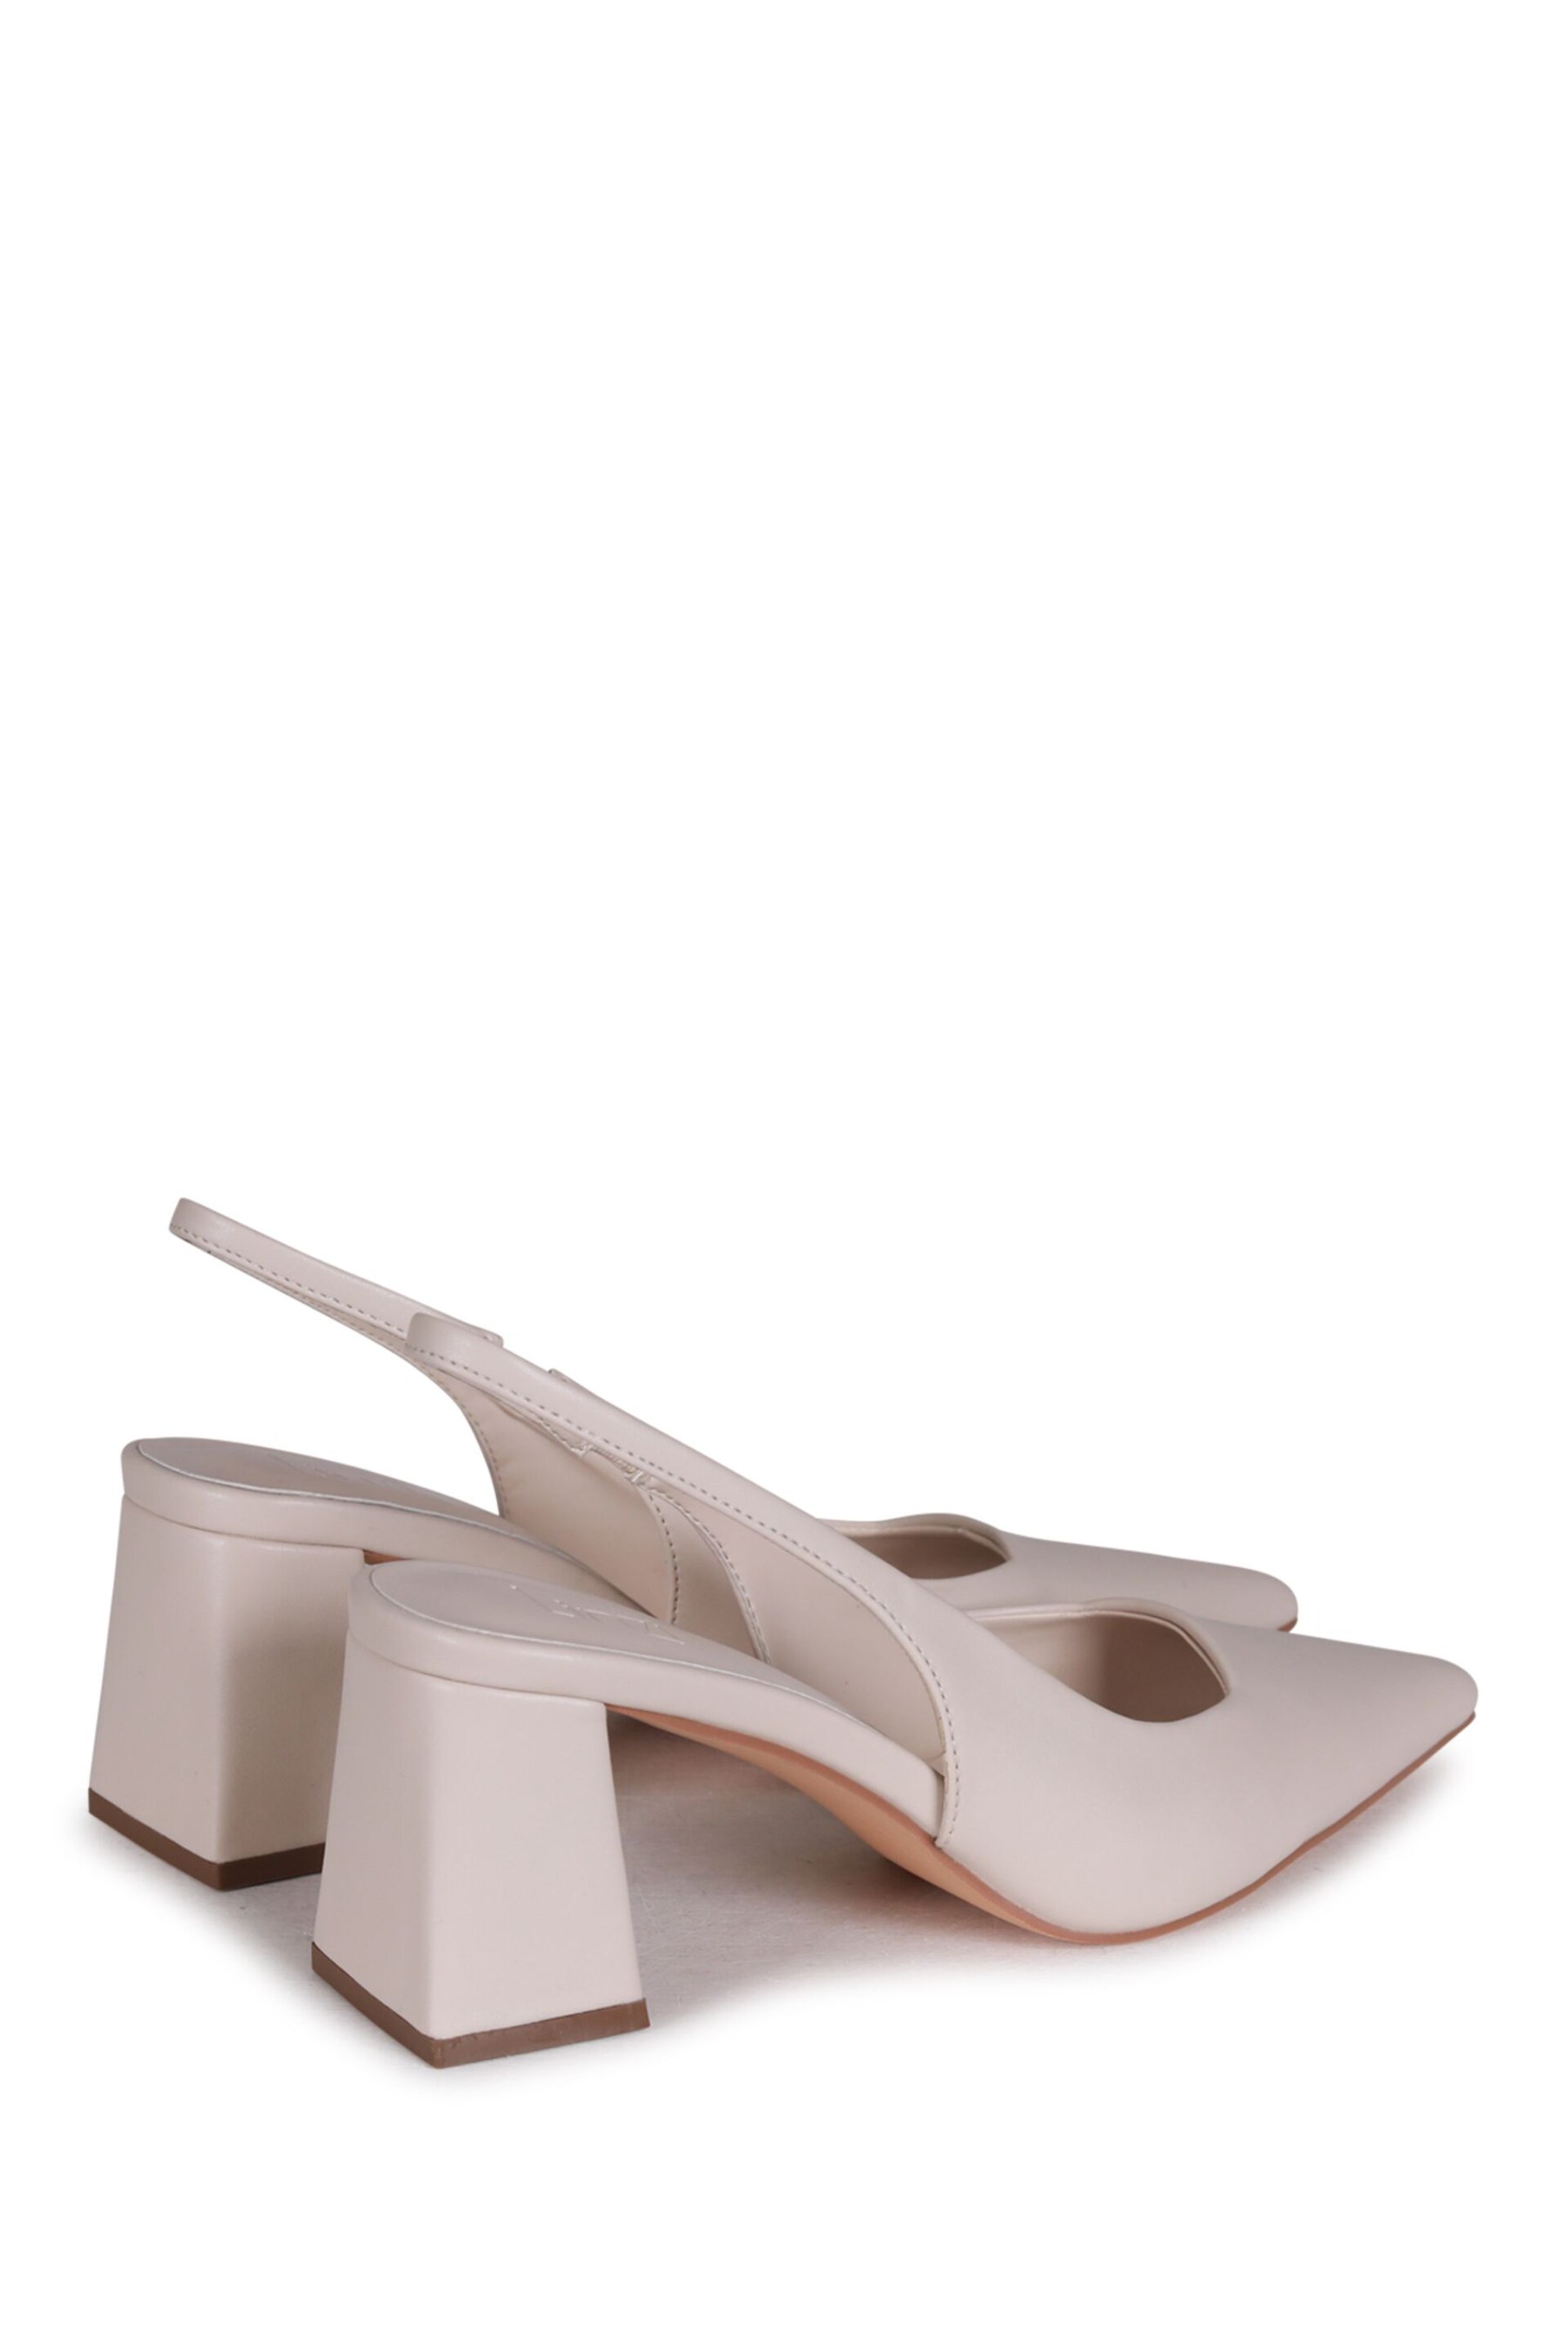 Linzi Cream Elizabeth Slingback Court Shoe With Block Heels - Image 4 of 4